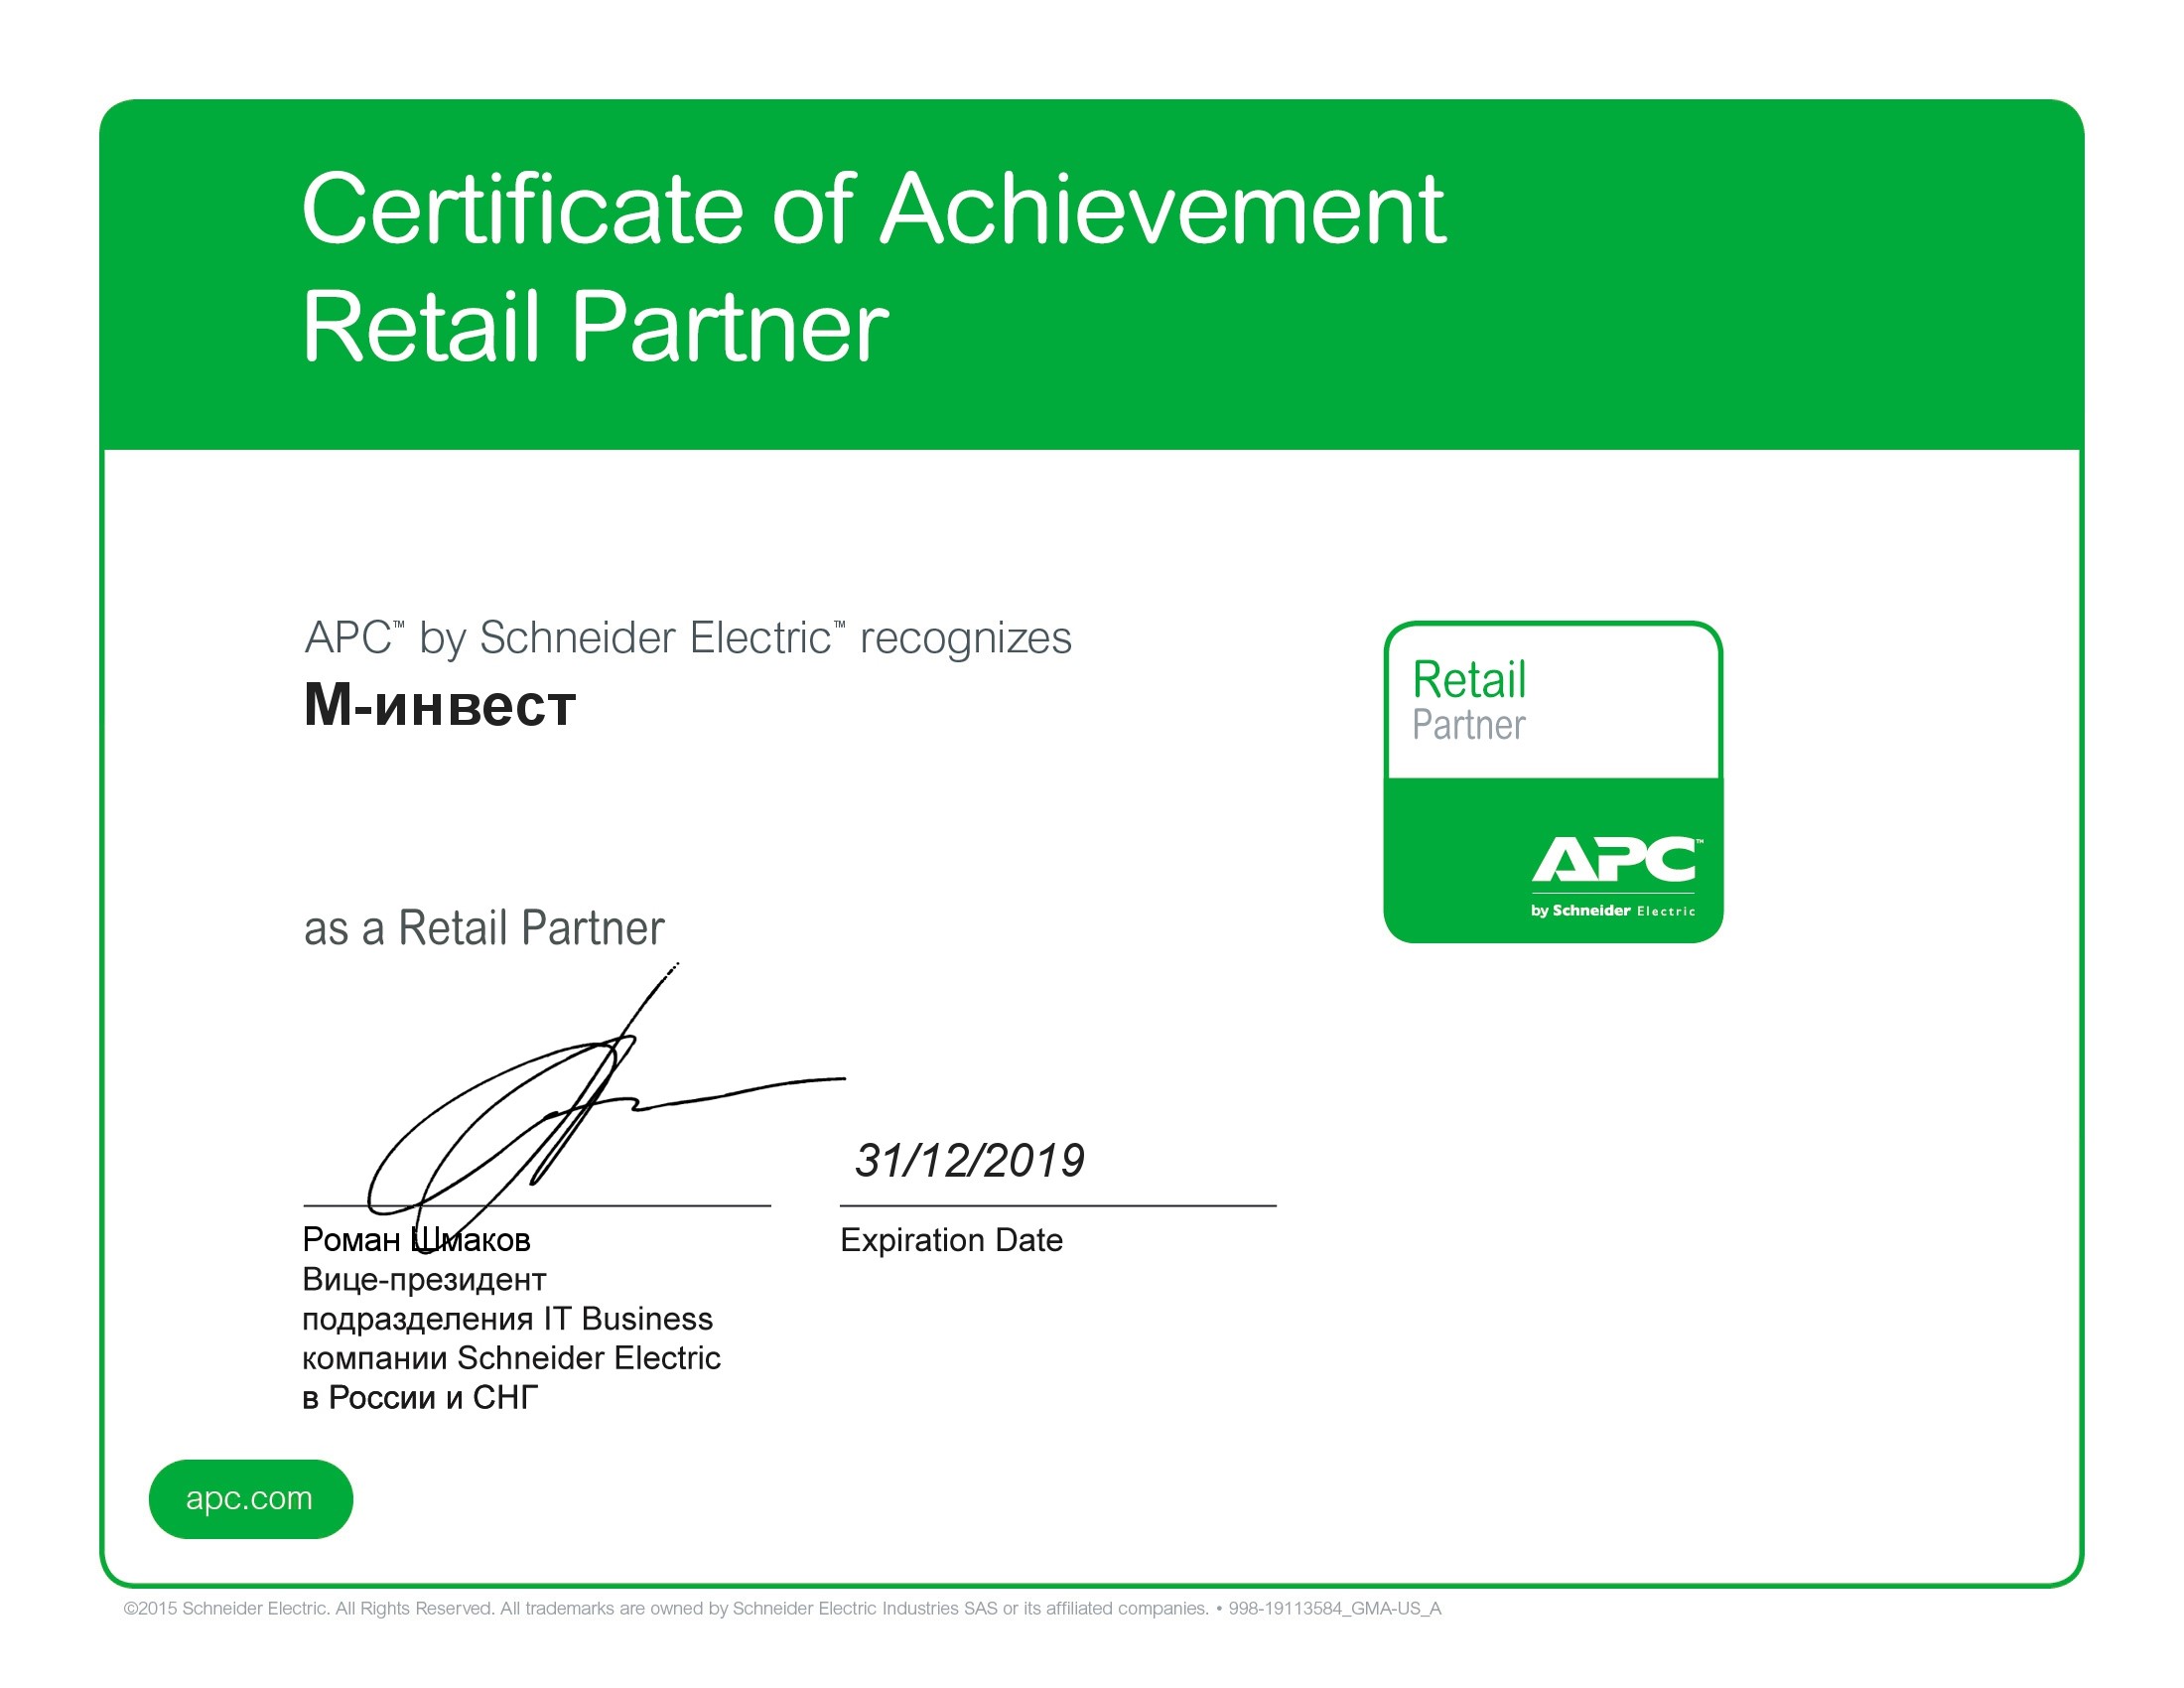 X-Com подтвердил статус Retail Partner компании APC by Schneider Electric